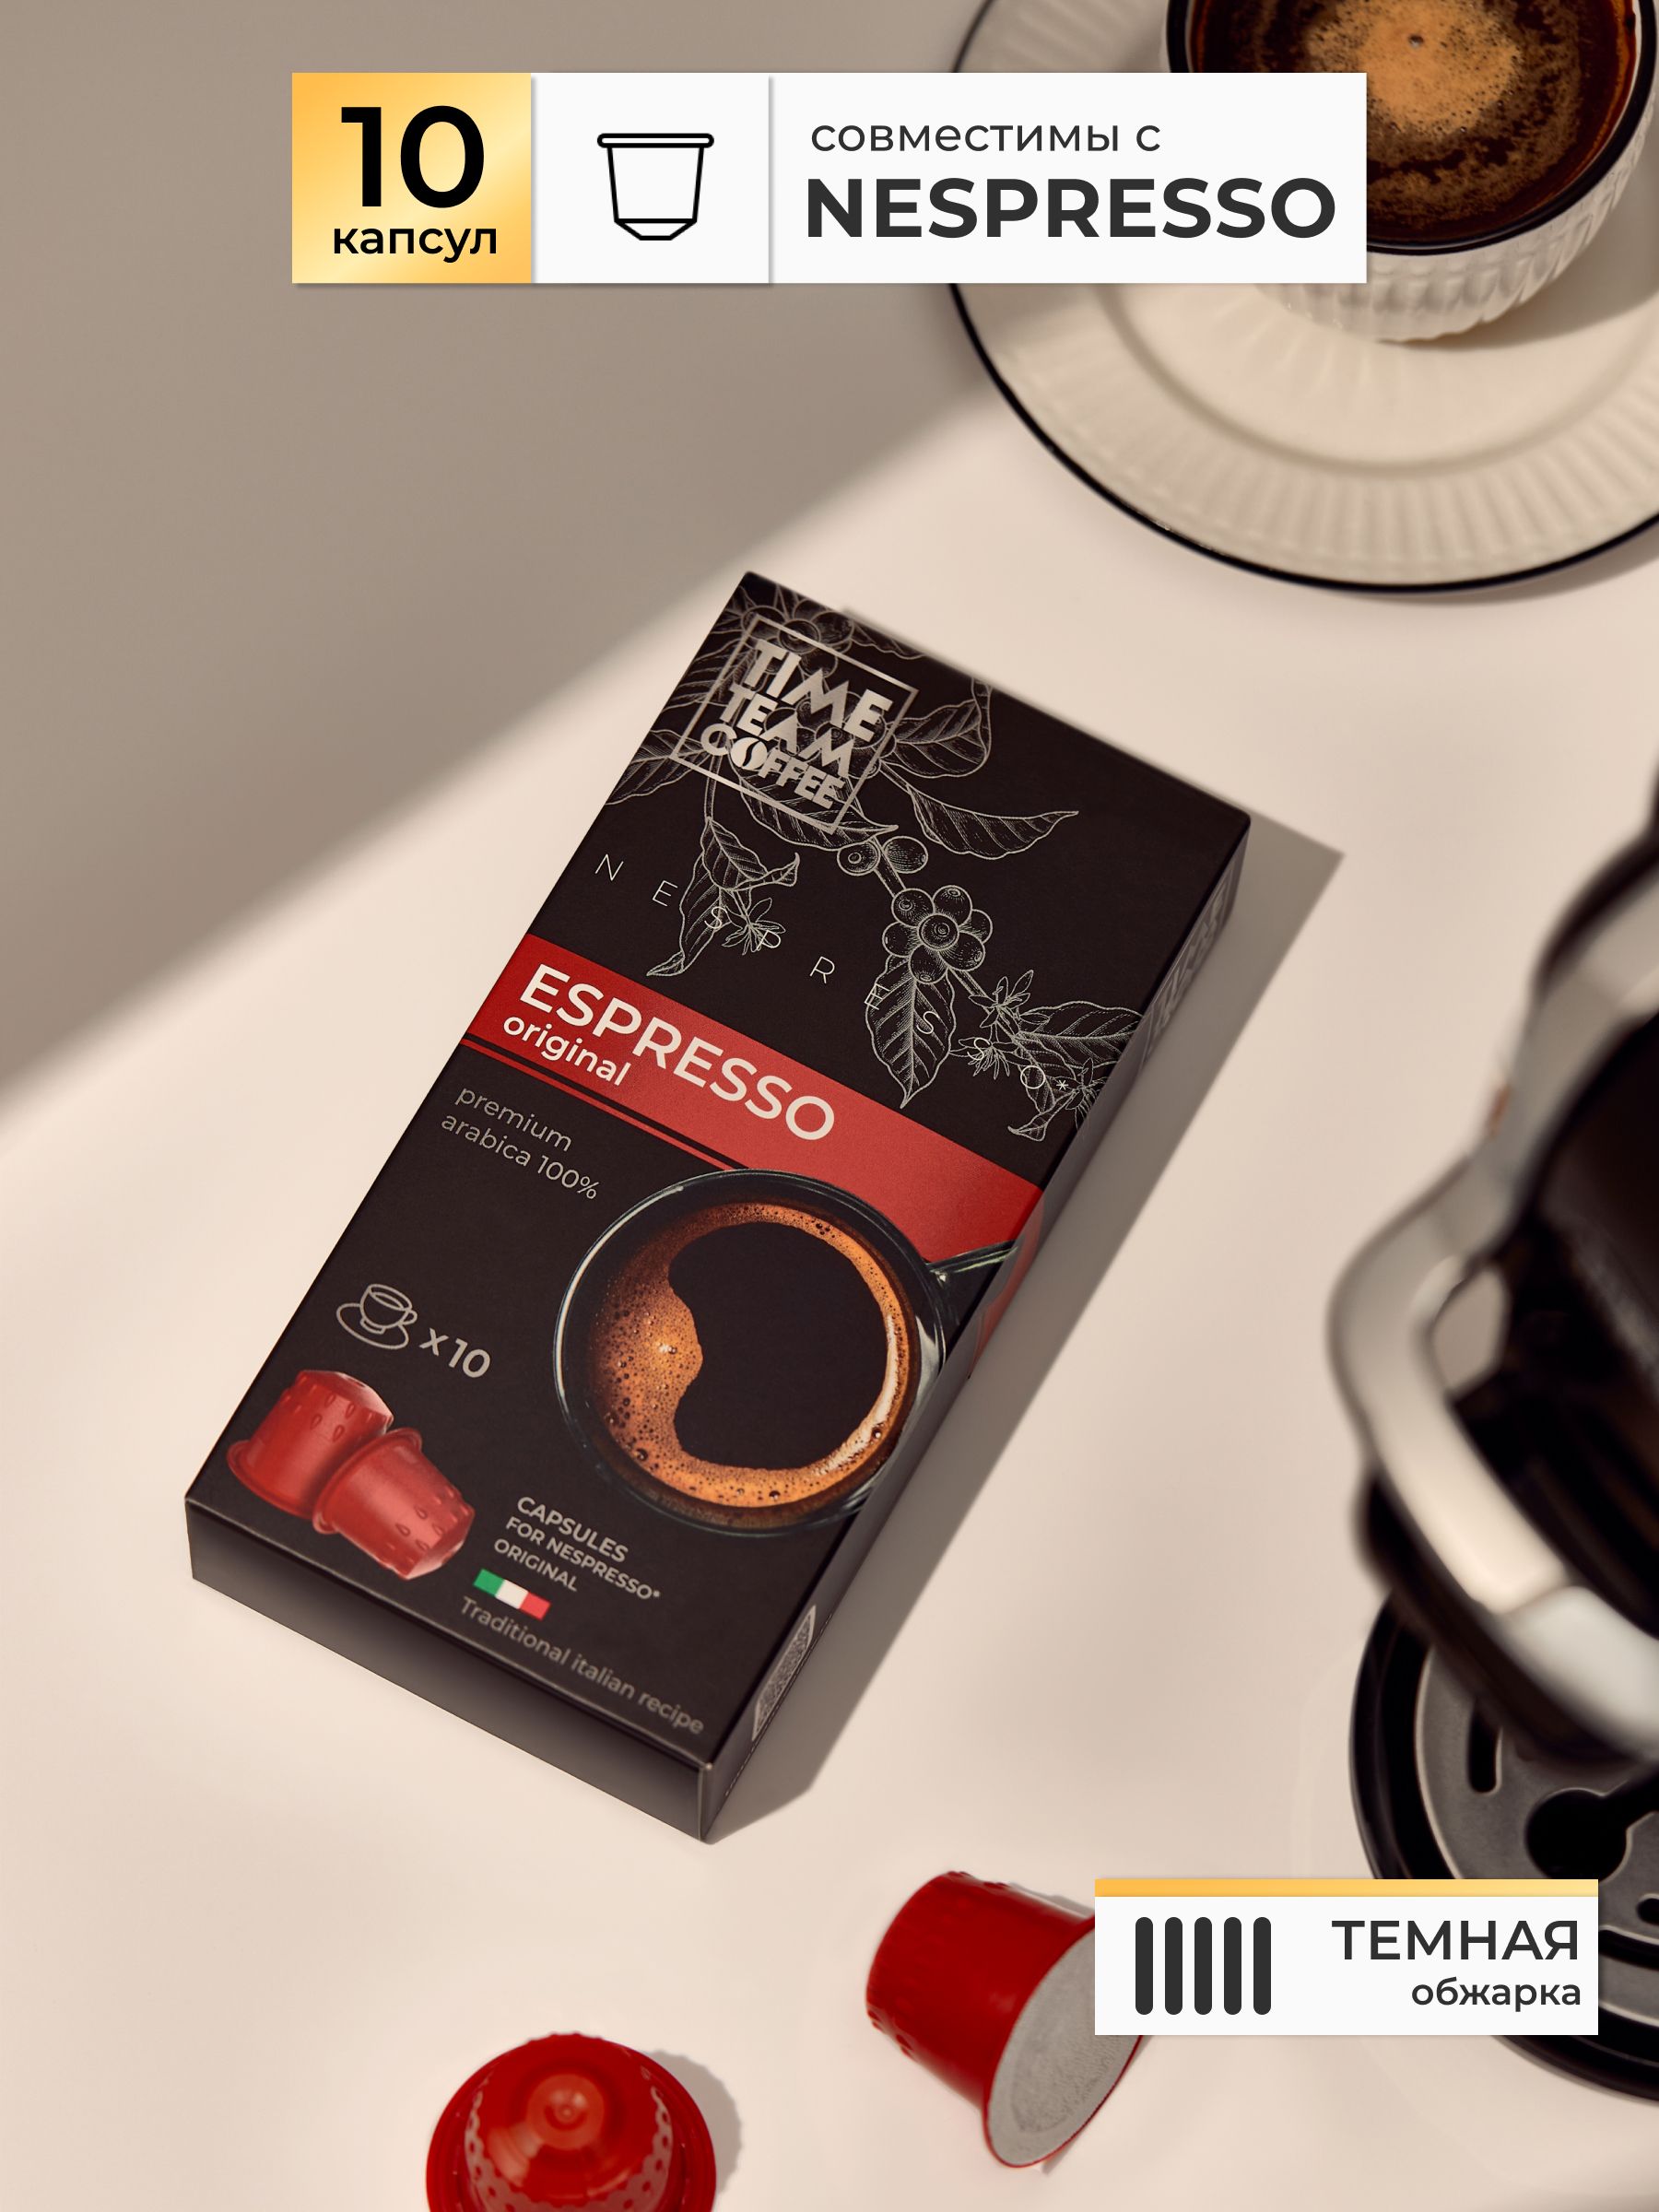 Кофе в капсулах Time Team Coffee Espresso Original Эспрессо Nespresso арабика, 10 капсул